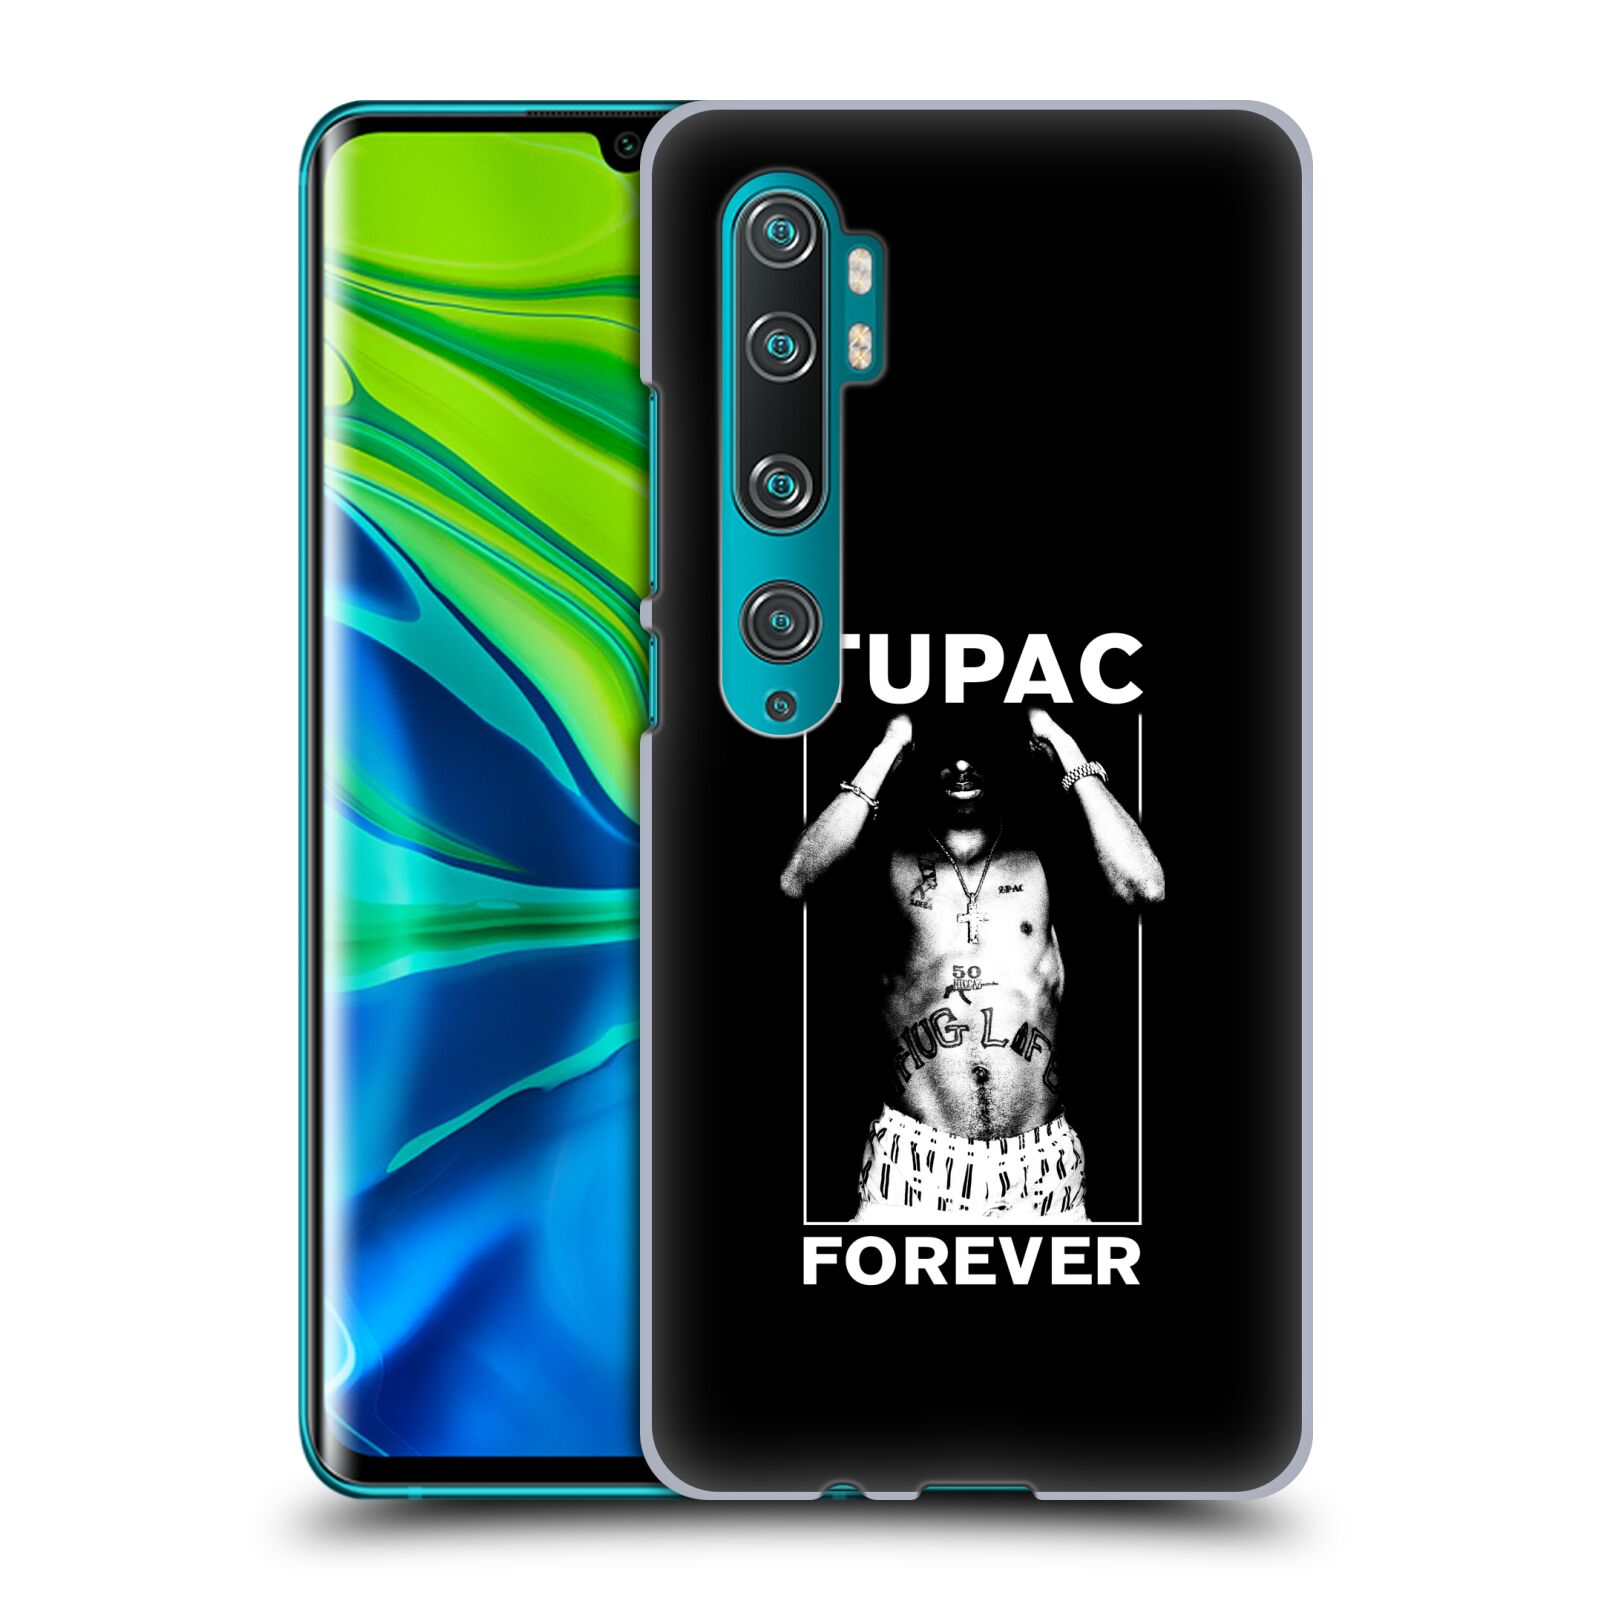 Pouzdro na mobil Xiaomi Mi Note 10 / Mi Note 10 PRO - HEAD CASE - Zpěvák rapper Tupac Shakur 2Pac bílý popisek FOREVER